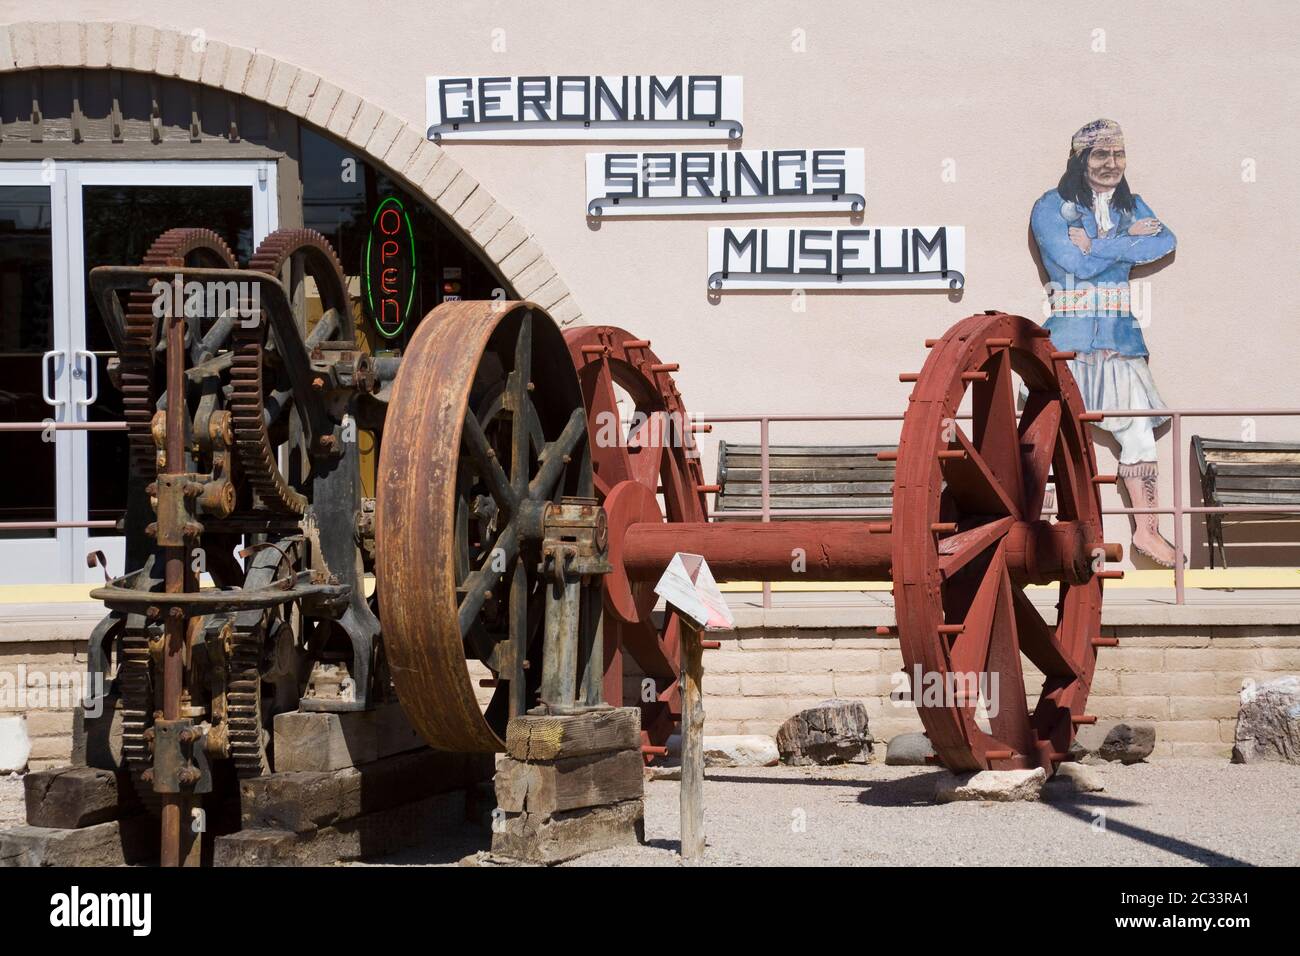 Geronimo Springs Museum, verità o conseguenze, New Mexico, USA Foto Stock